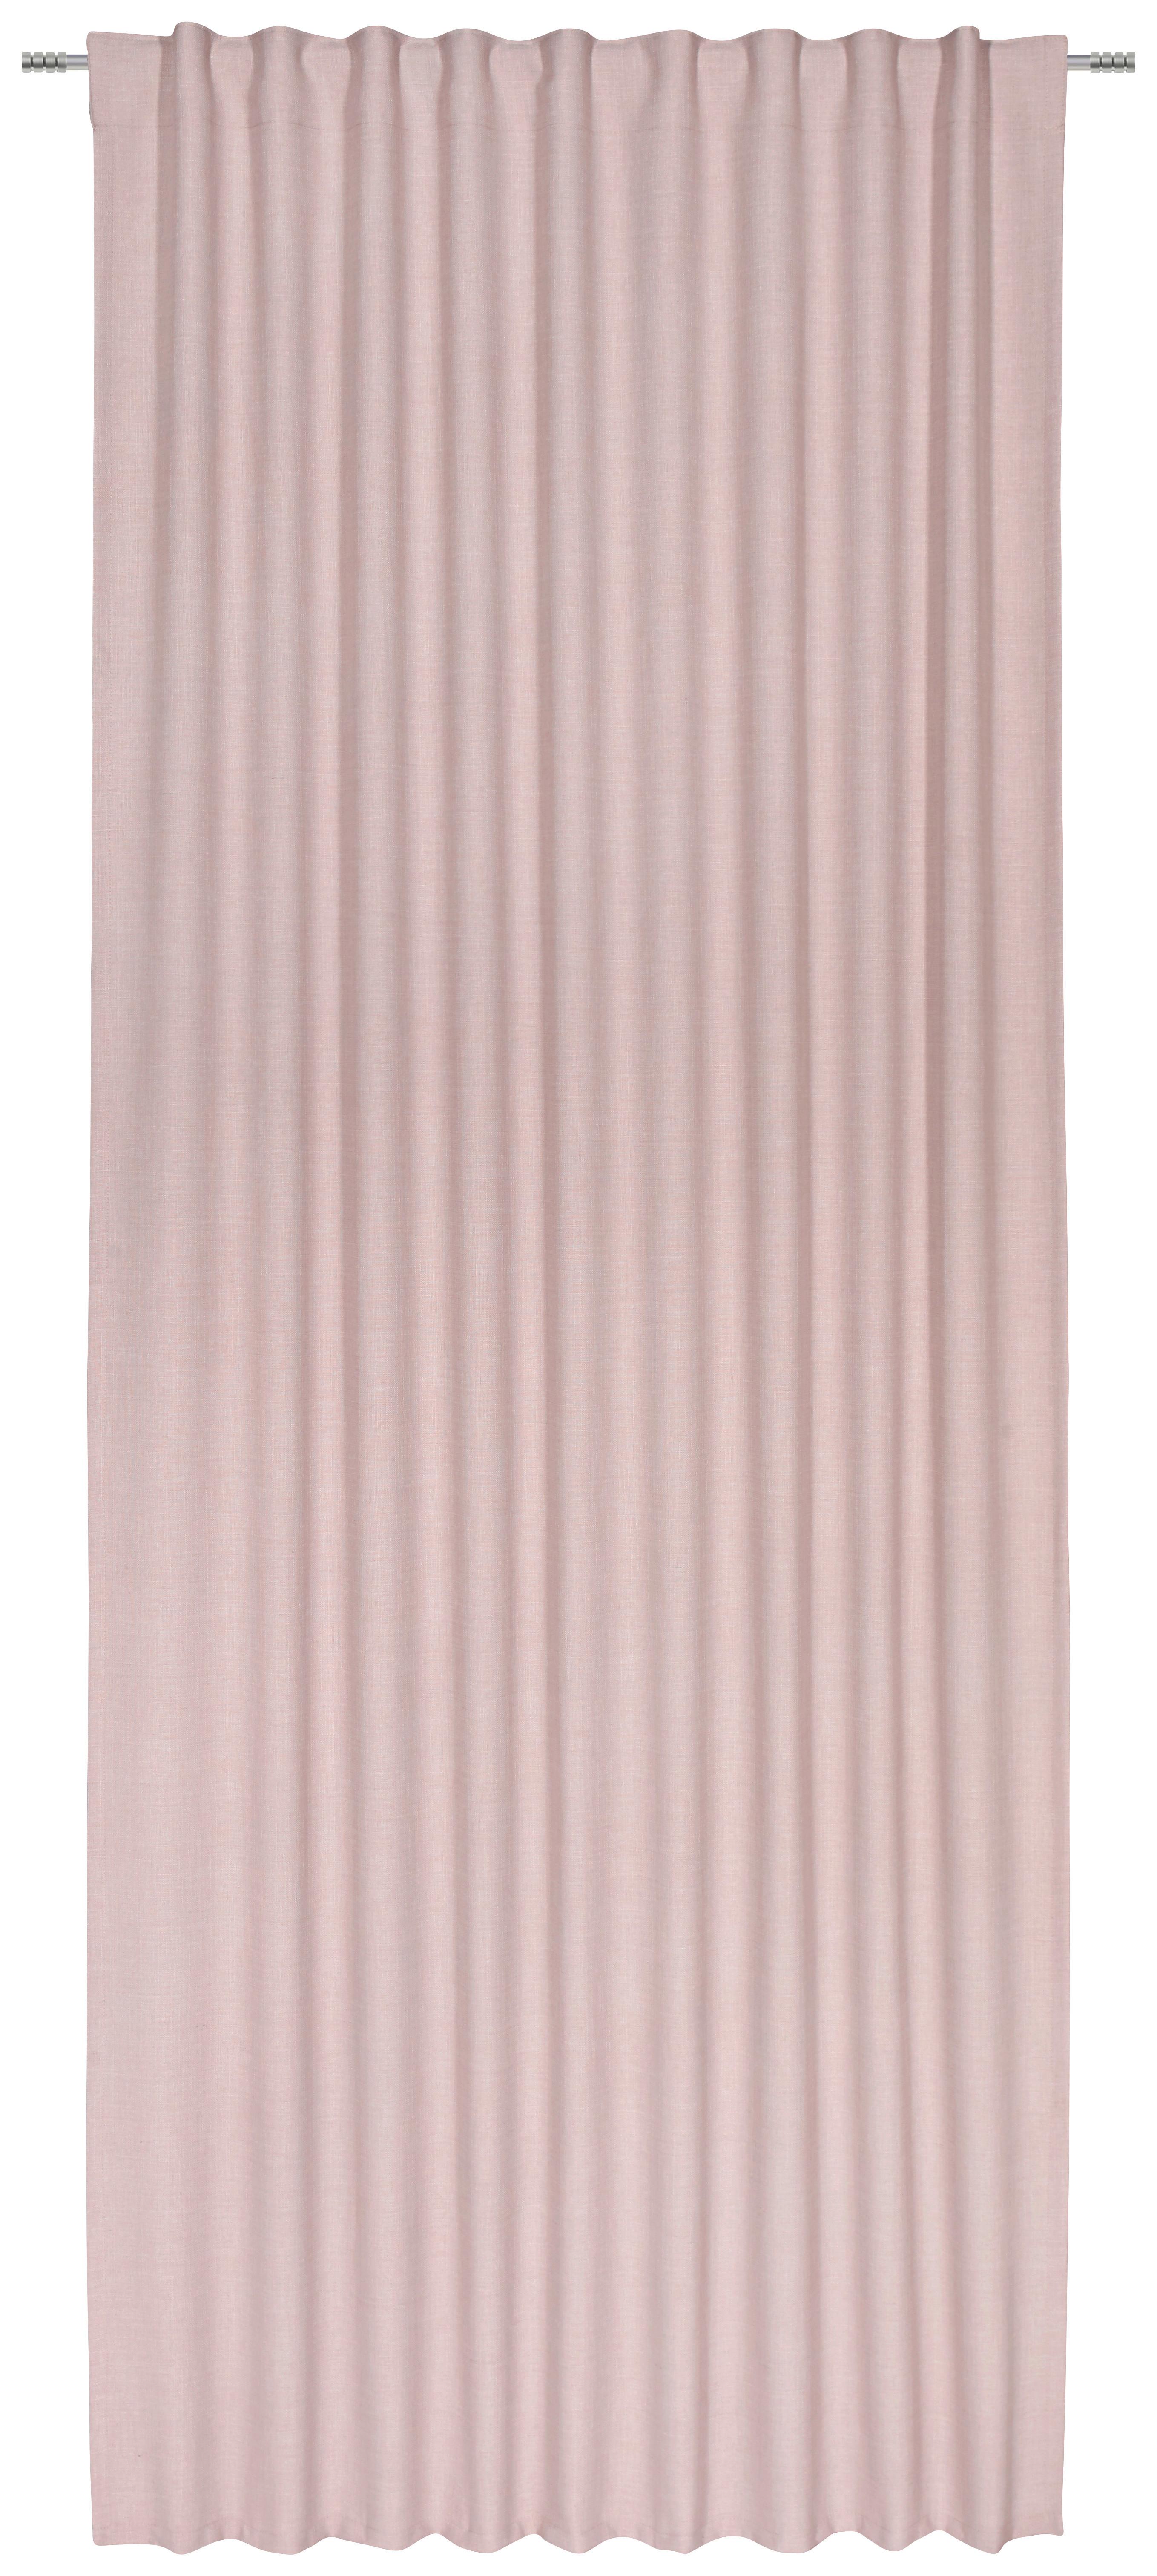 Hotový Závěs Leo, 135/255 Cm, Růžová - růžová, textil (135/255cm) - Premium Living